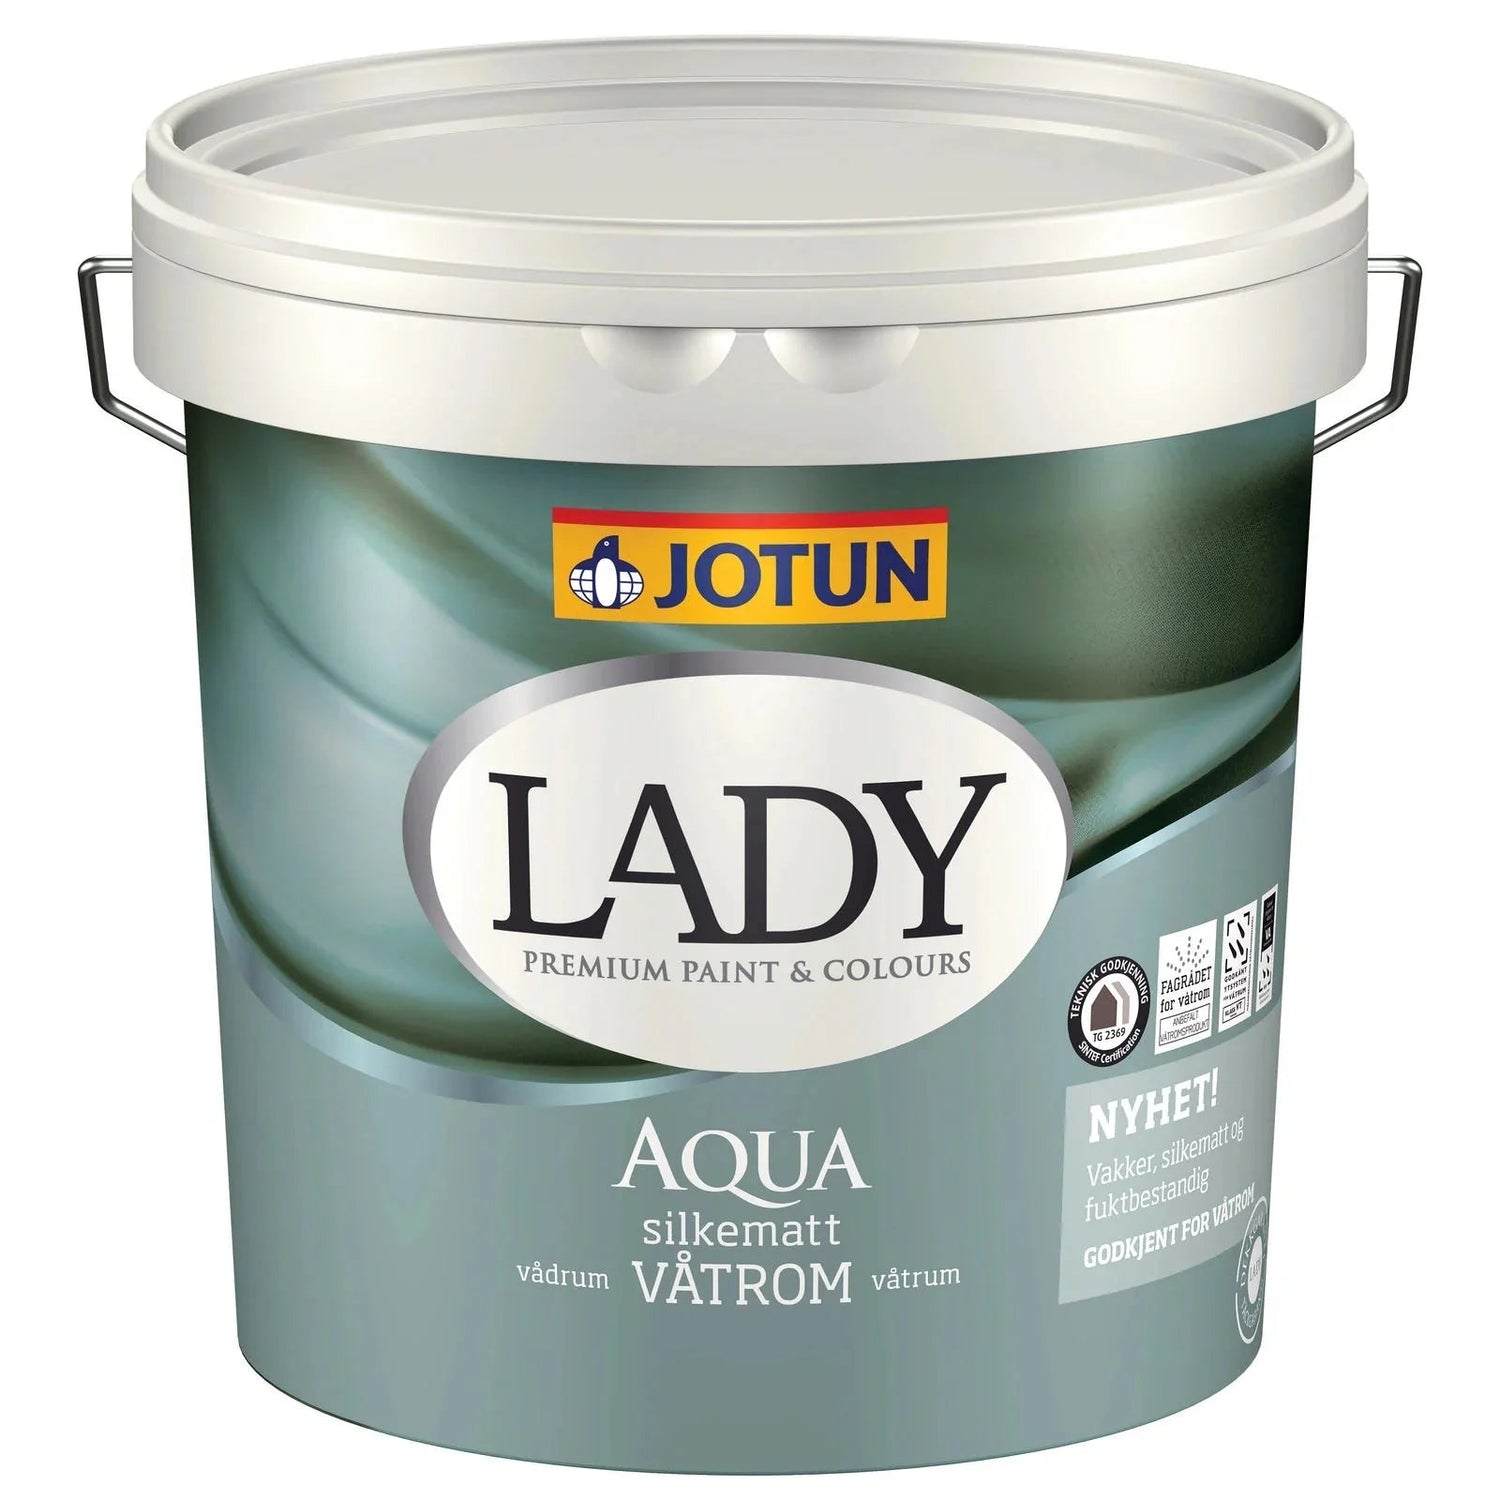 4625 NORDISK HAV - Jotun Lady Aqua - Malprivat.dk